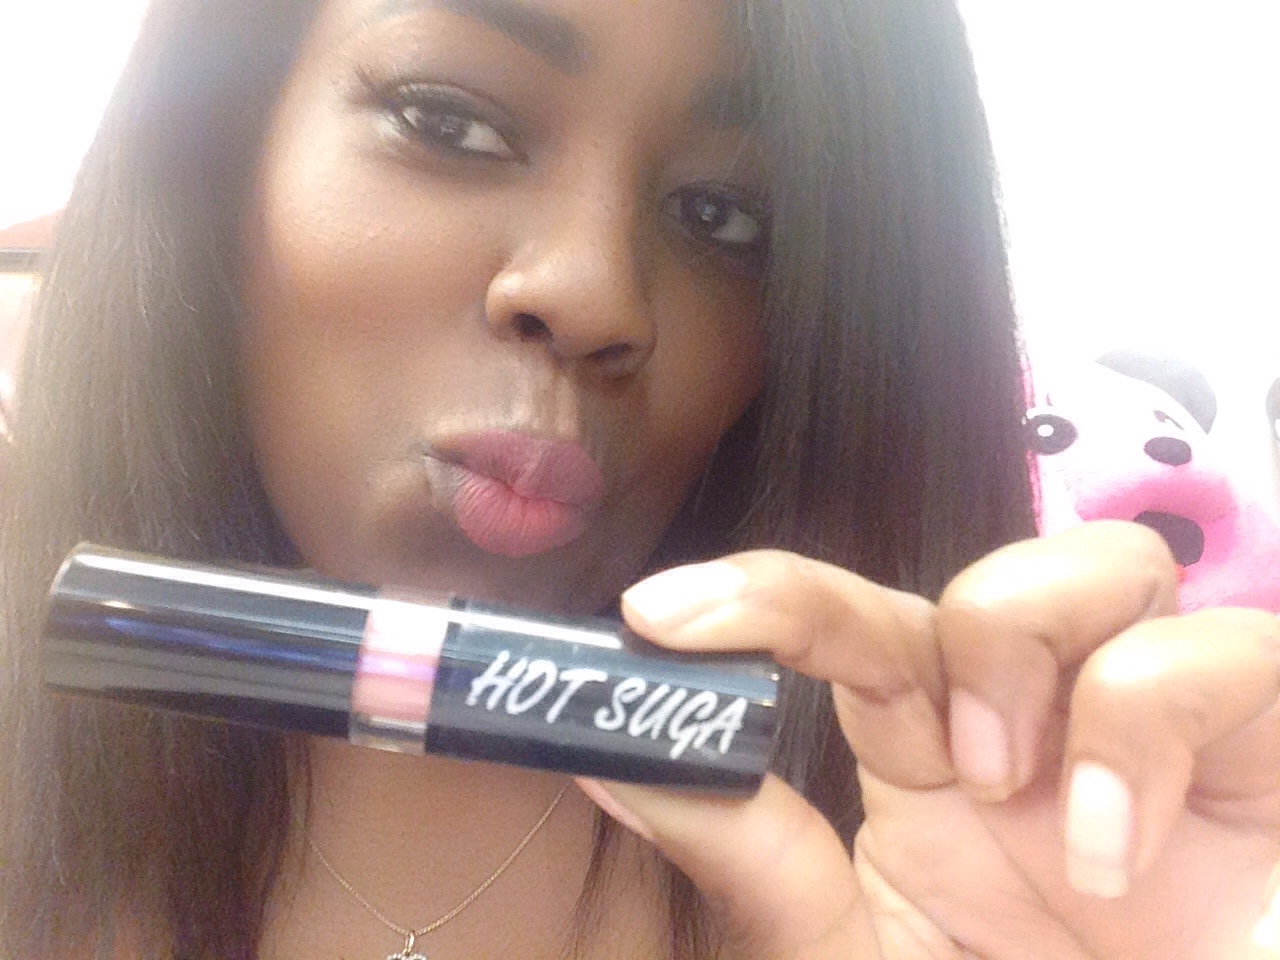 Pinktastic Saturday: Hot Suga Lipstick